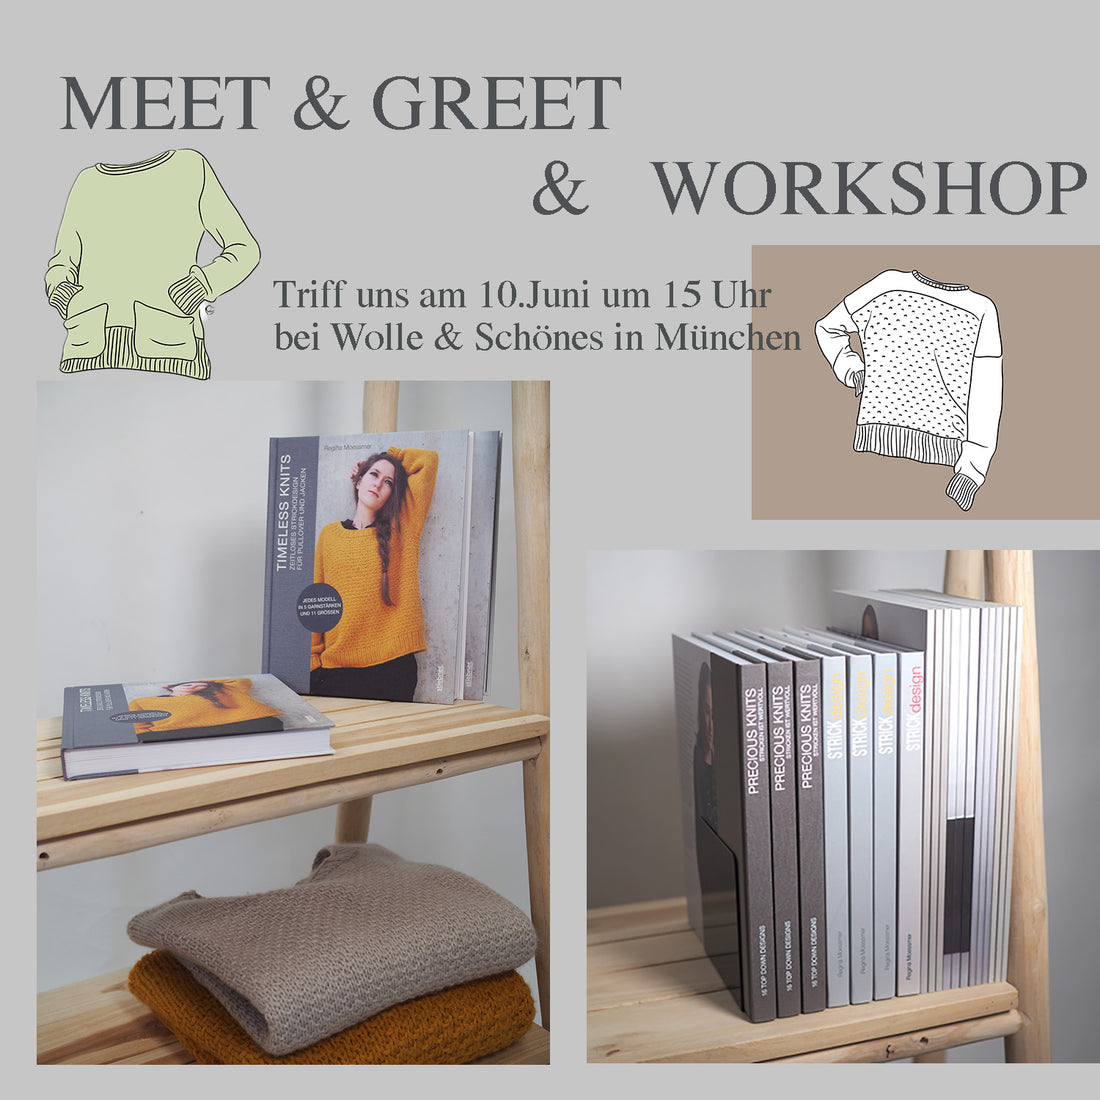 Meet & Greet and Workshop